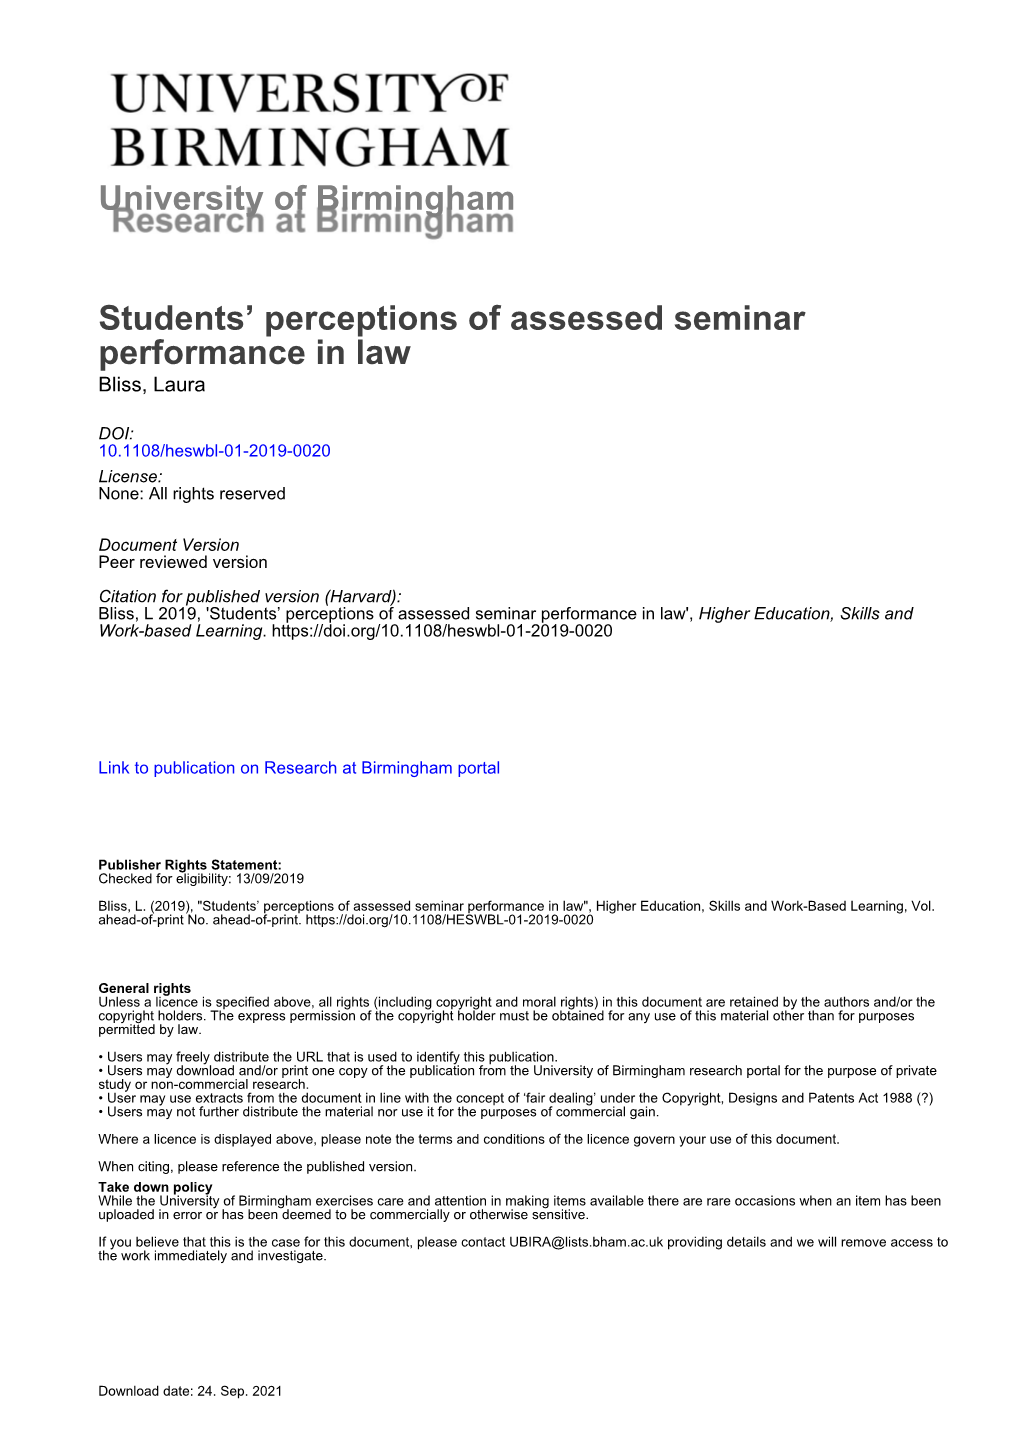 University of Birmingham Students' Perceptions of Assessed Seminar